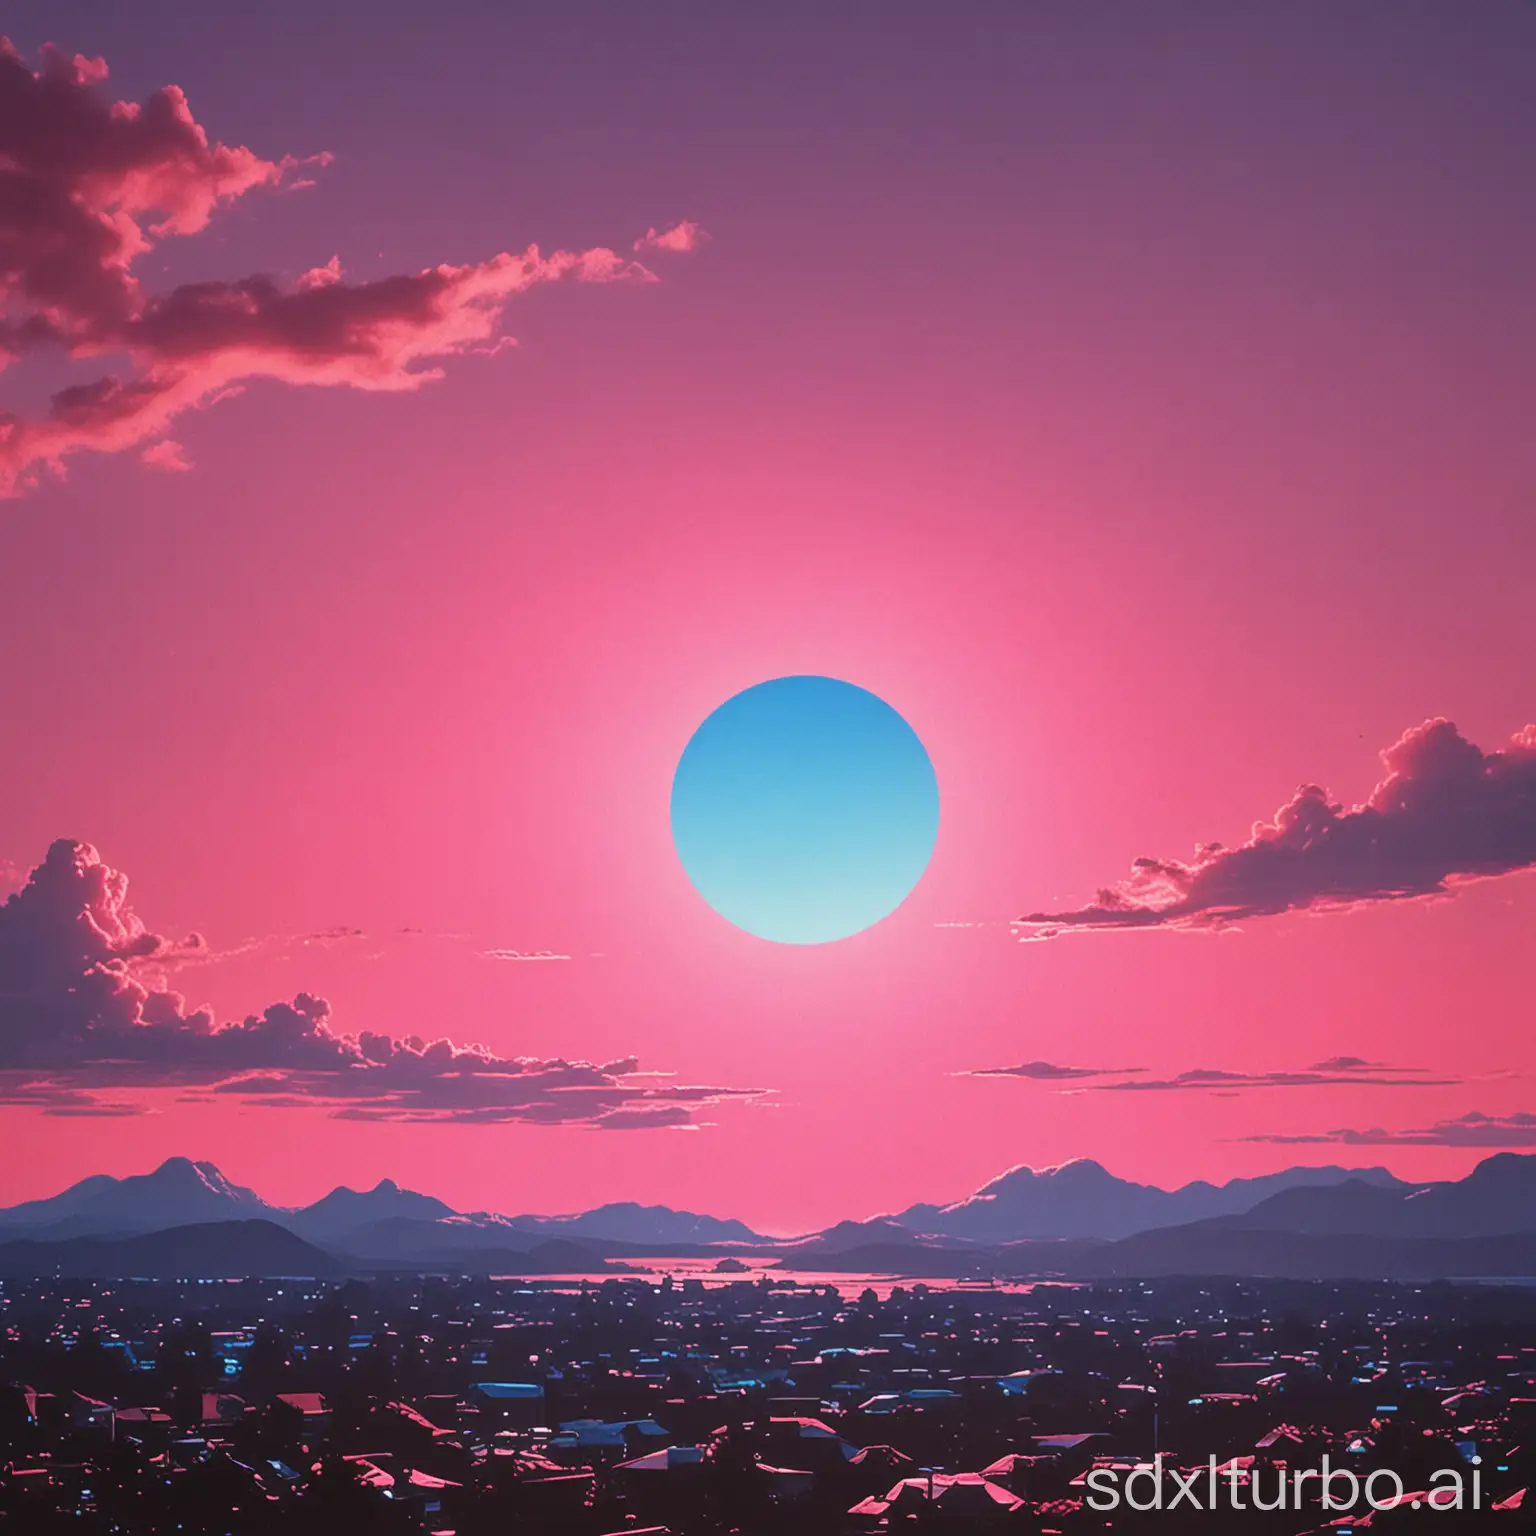 Nostalgic-80s-Pink-and-Blue-Sunset-Landscape